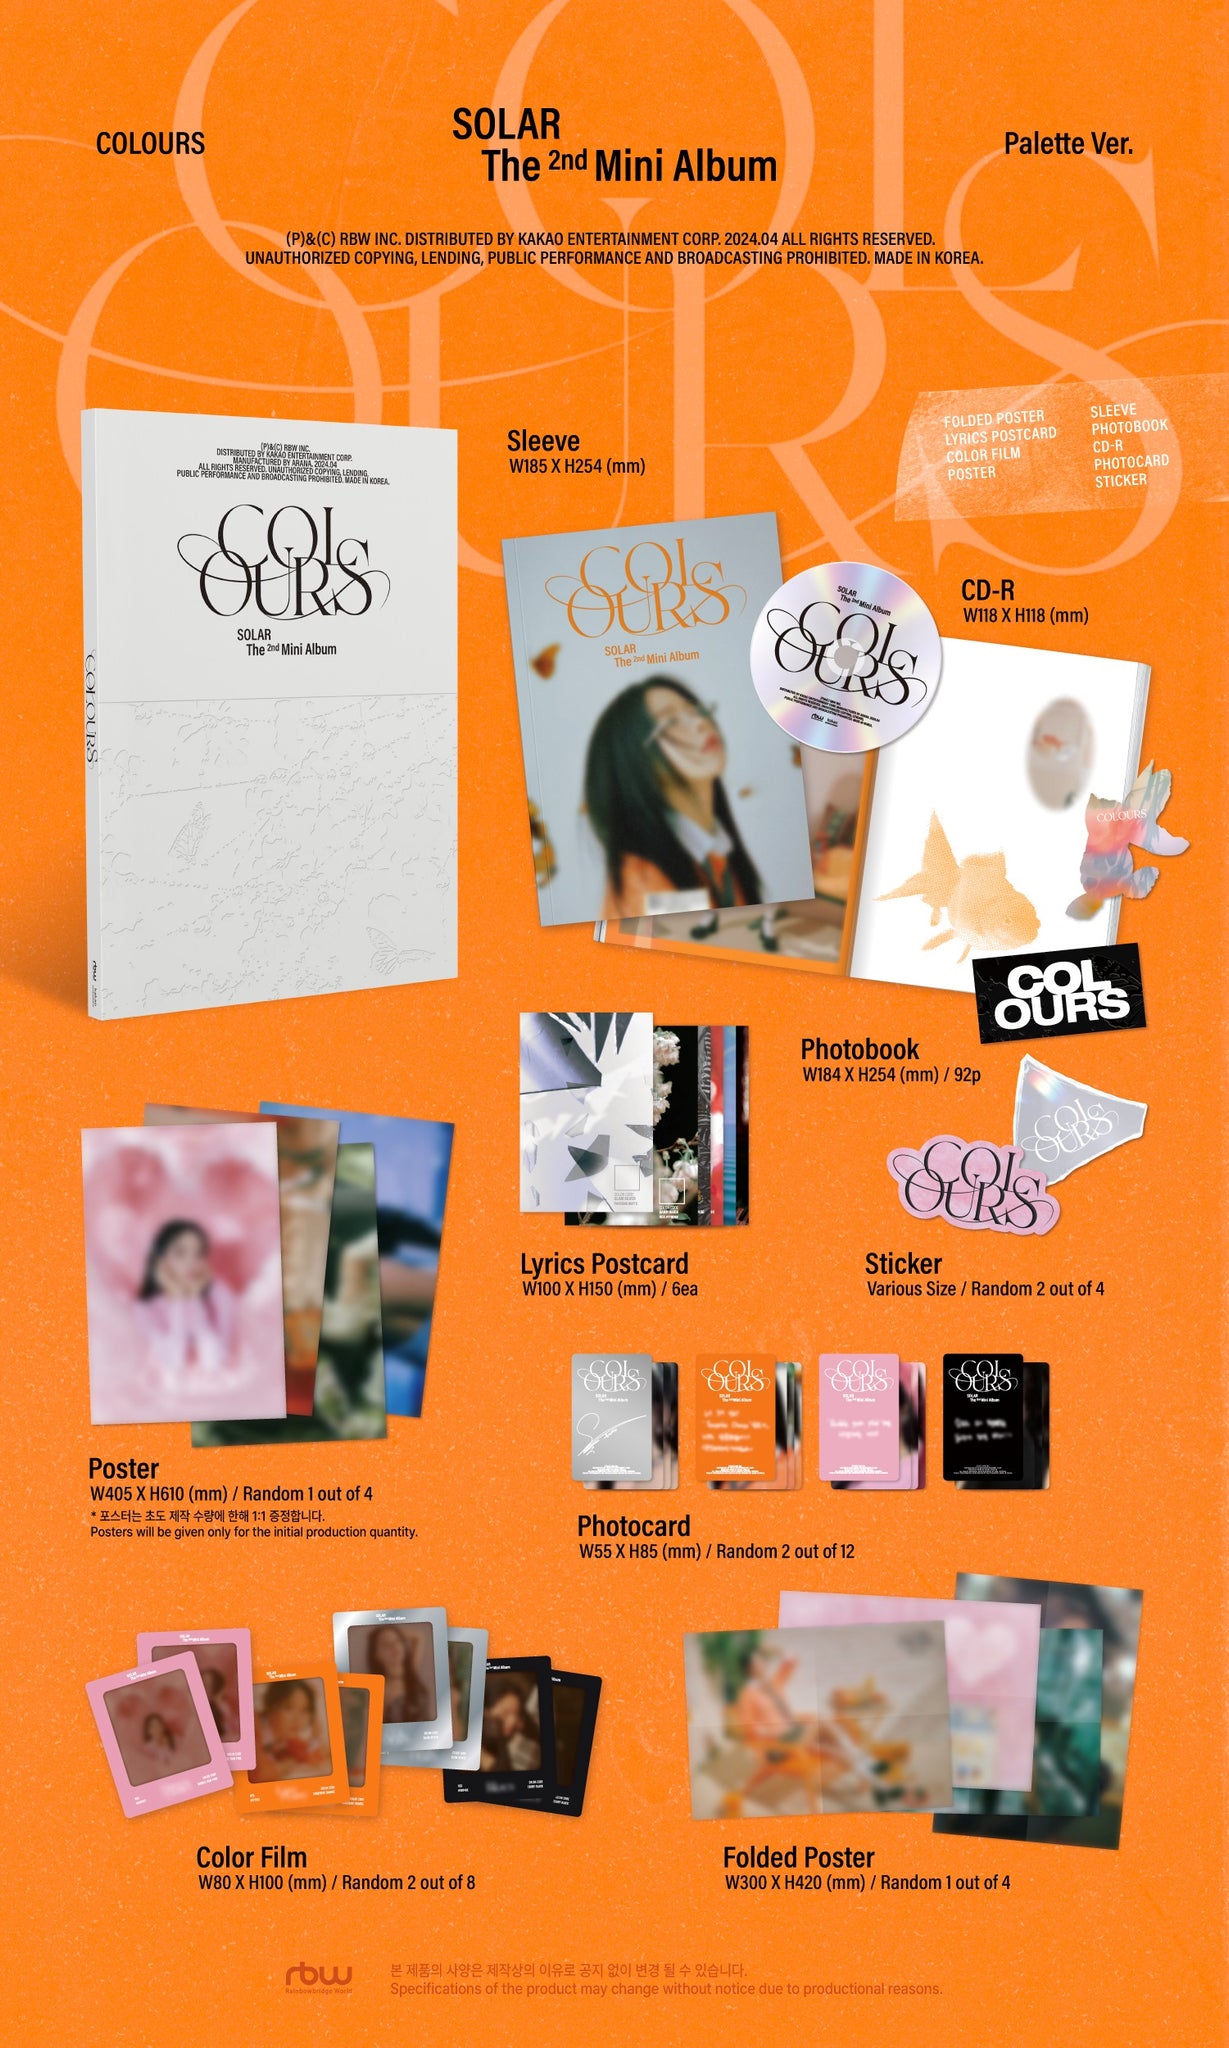 Solar 2nd Mini Album COLOURS - Palette Version Inclusions: Sleeve, Photobook, CD, Lyrics Postcard Set, Stickers, Color Film, Photocards, Pre-order Poster